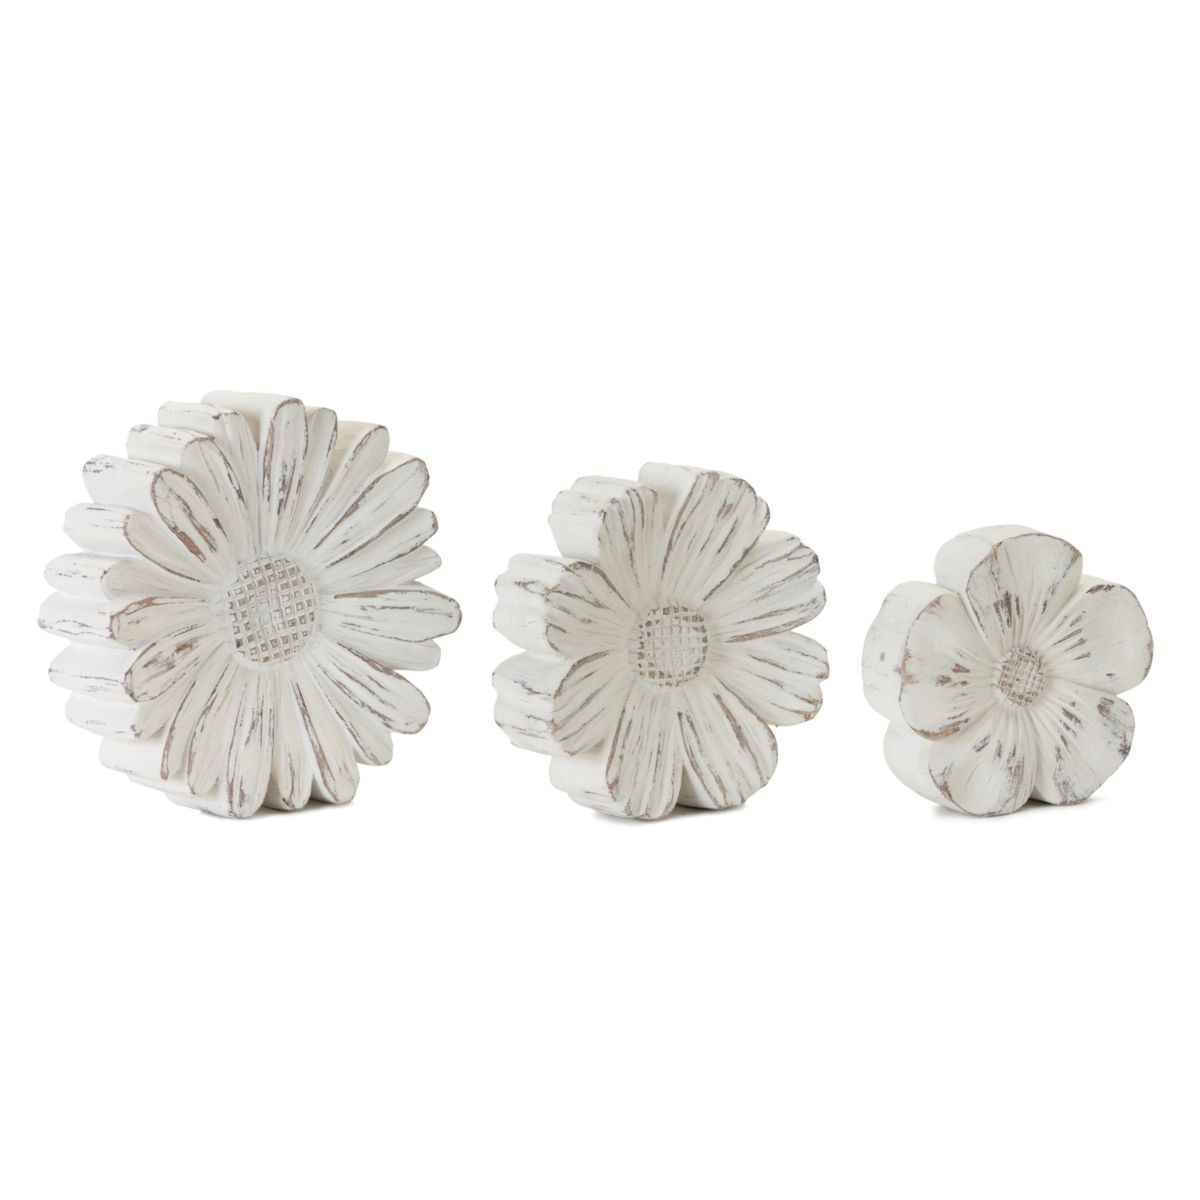 Melrose White Washed Stone Flower Décor - Set of 3 Melrose